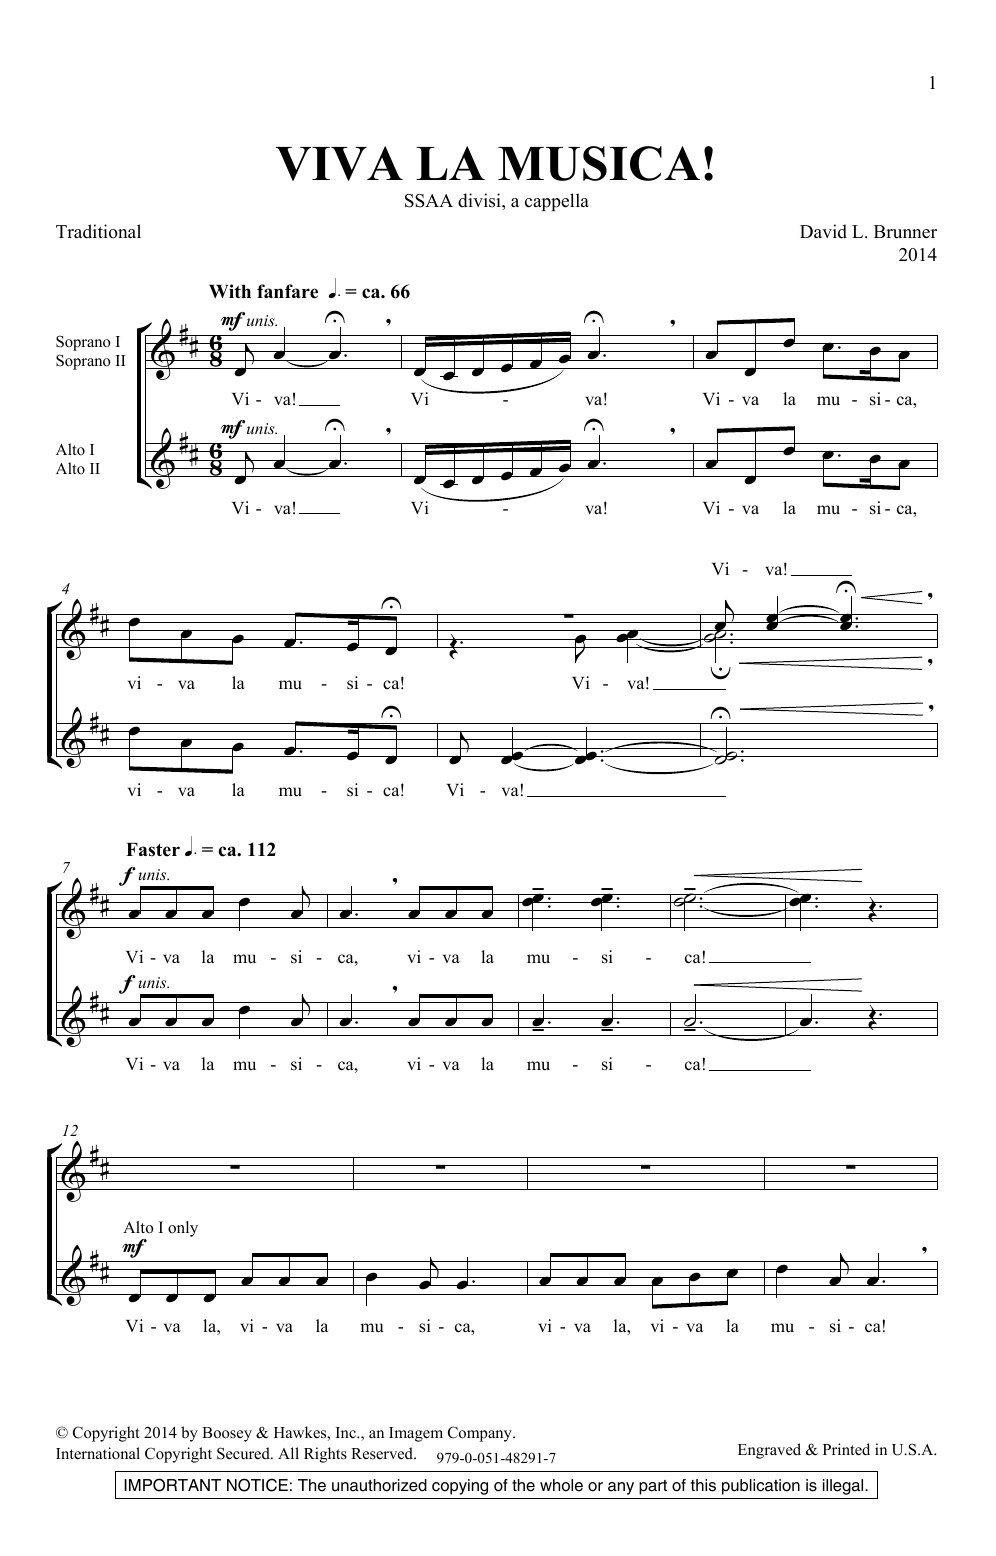 David Brunner Viva La Musica sheet music notes and chords arranged for SSA Choir